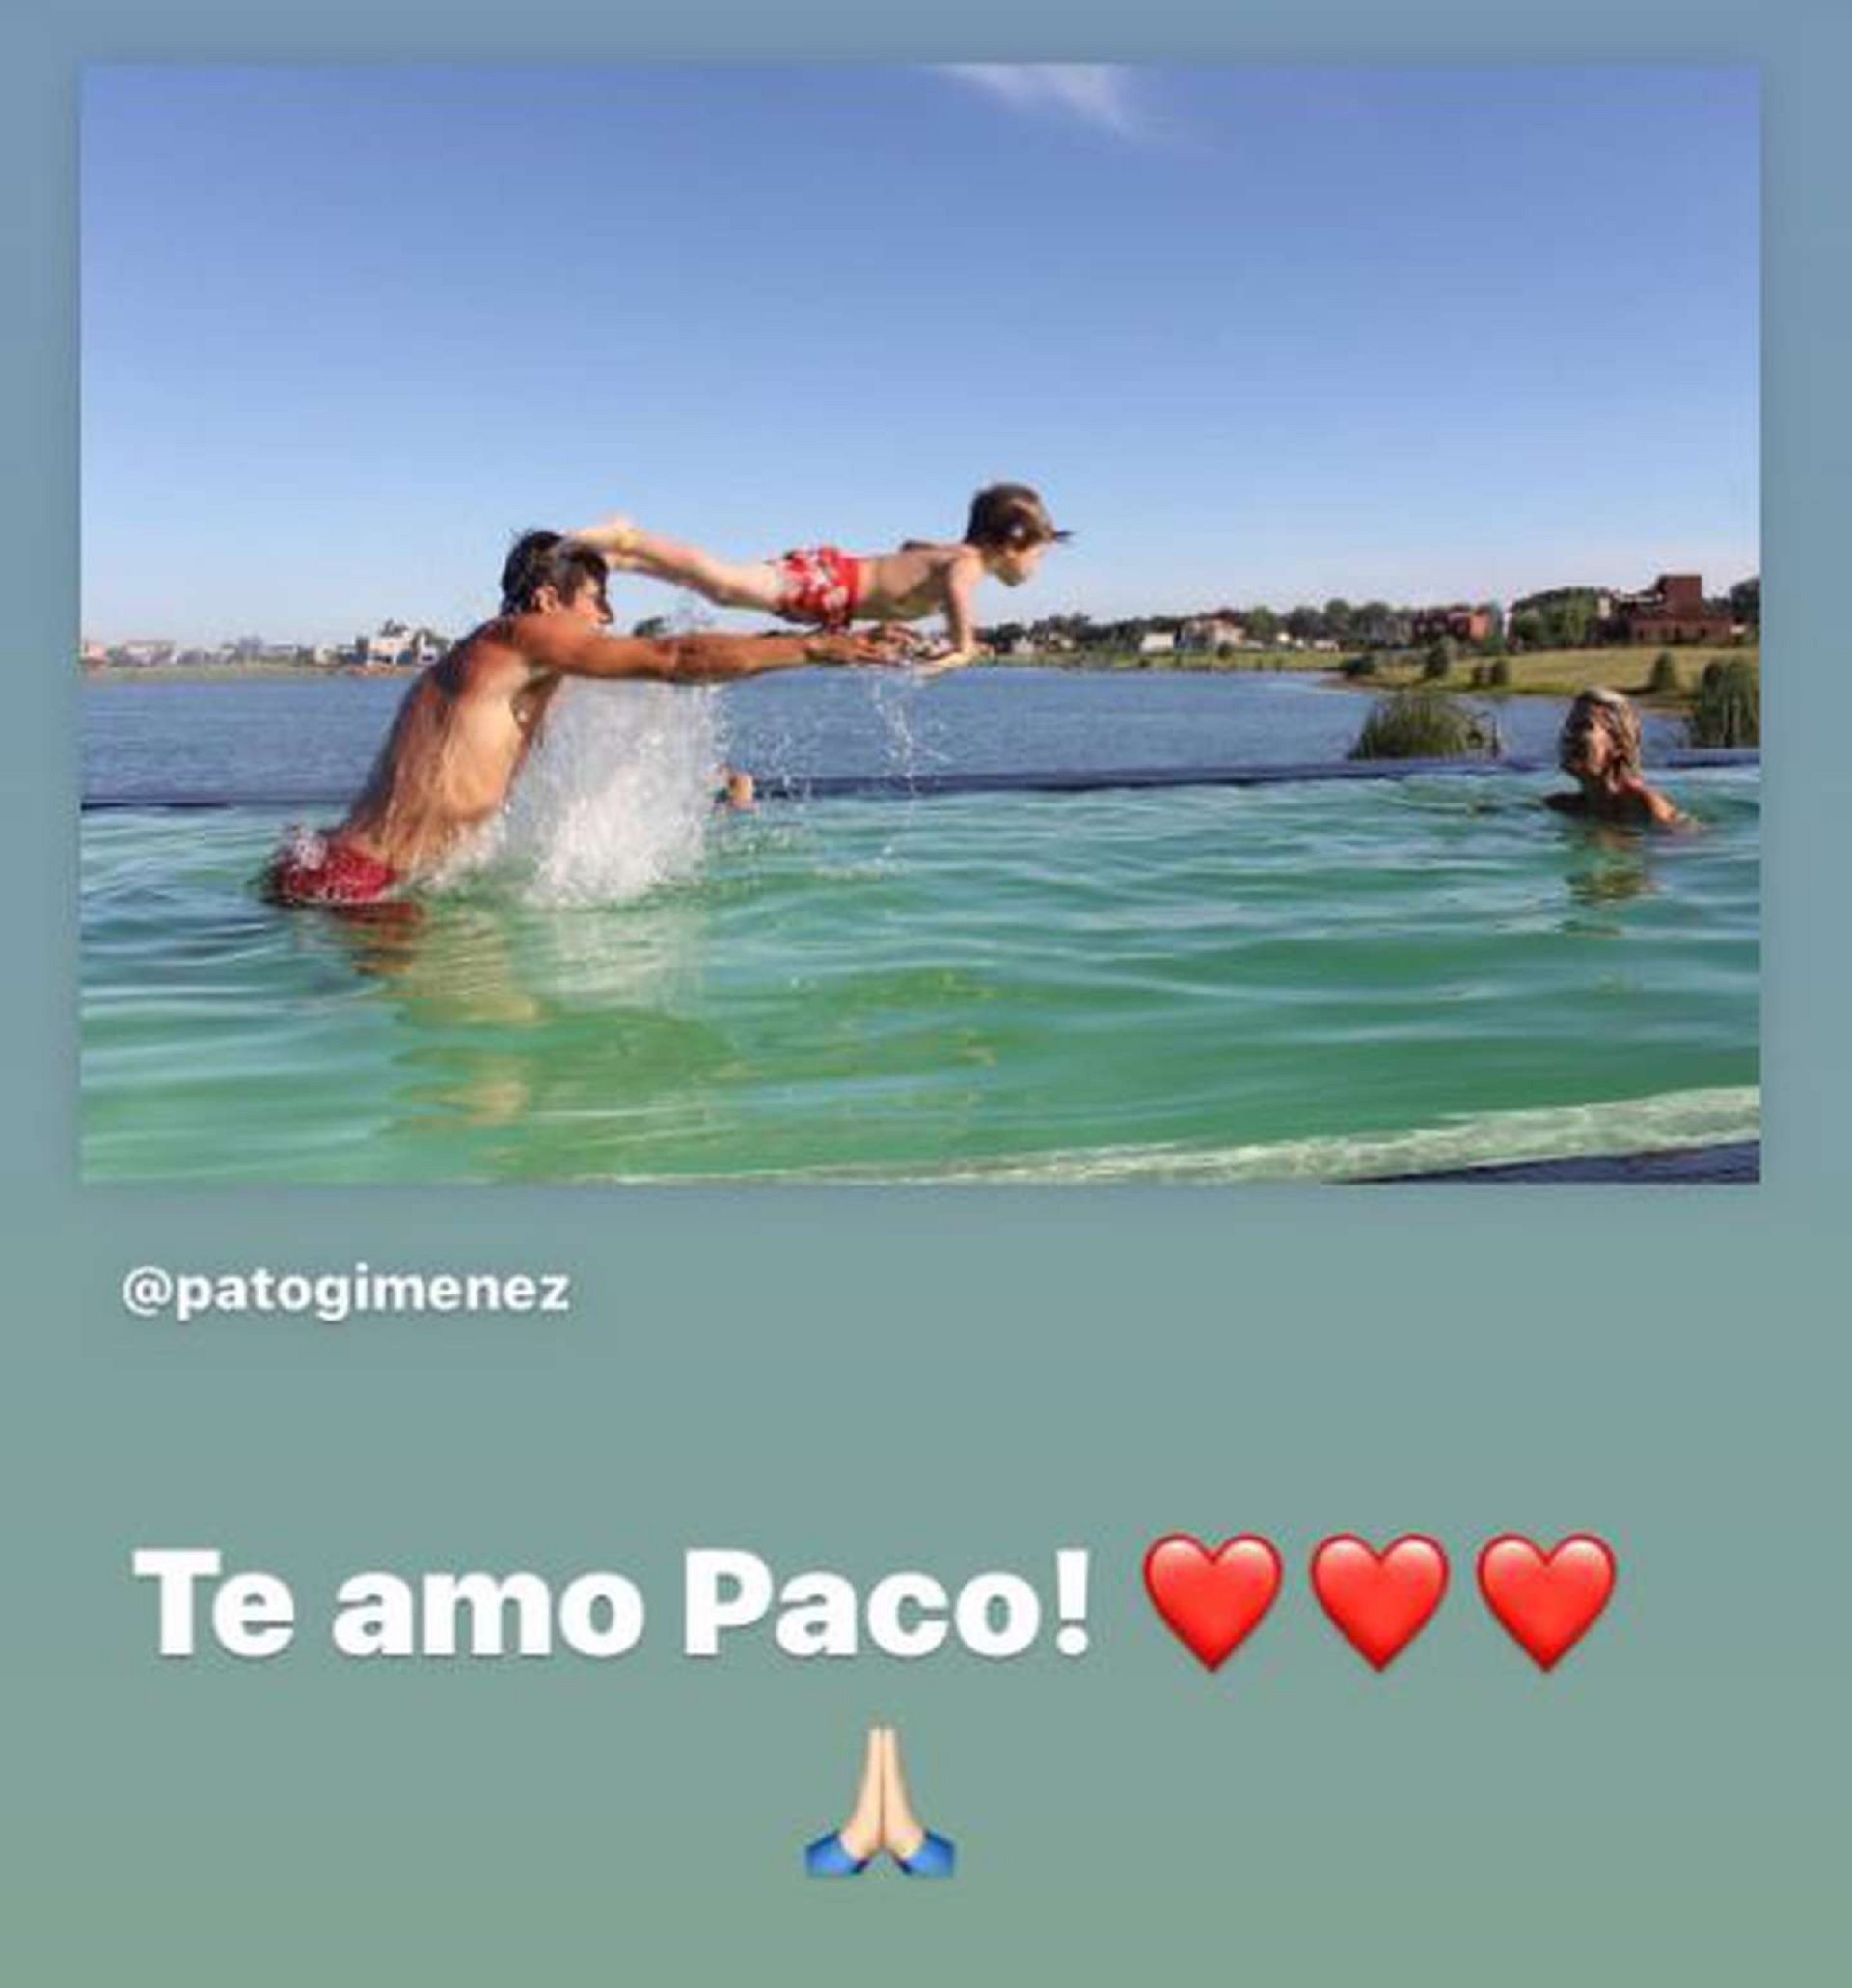 Message from Patricio Giménez to his nephew Paco (Instagram)